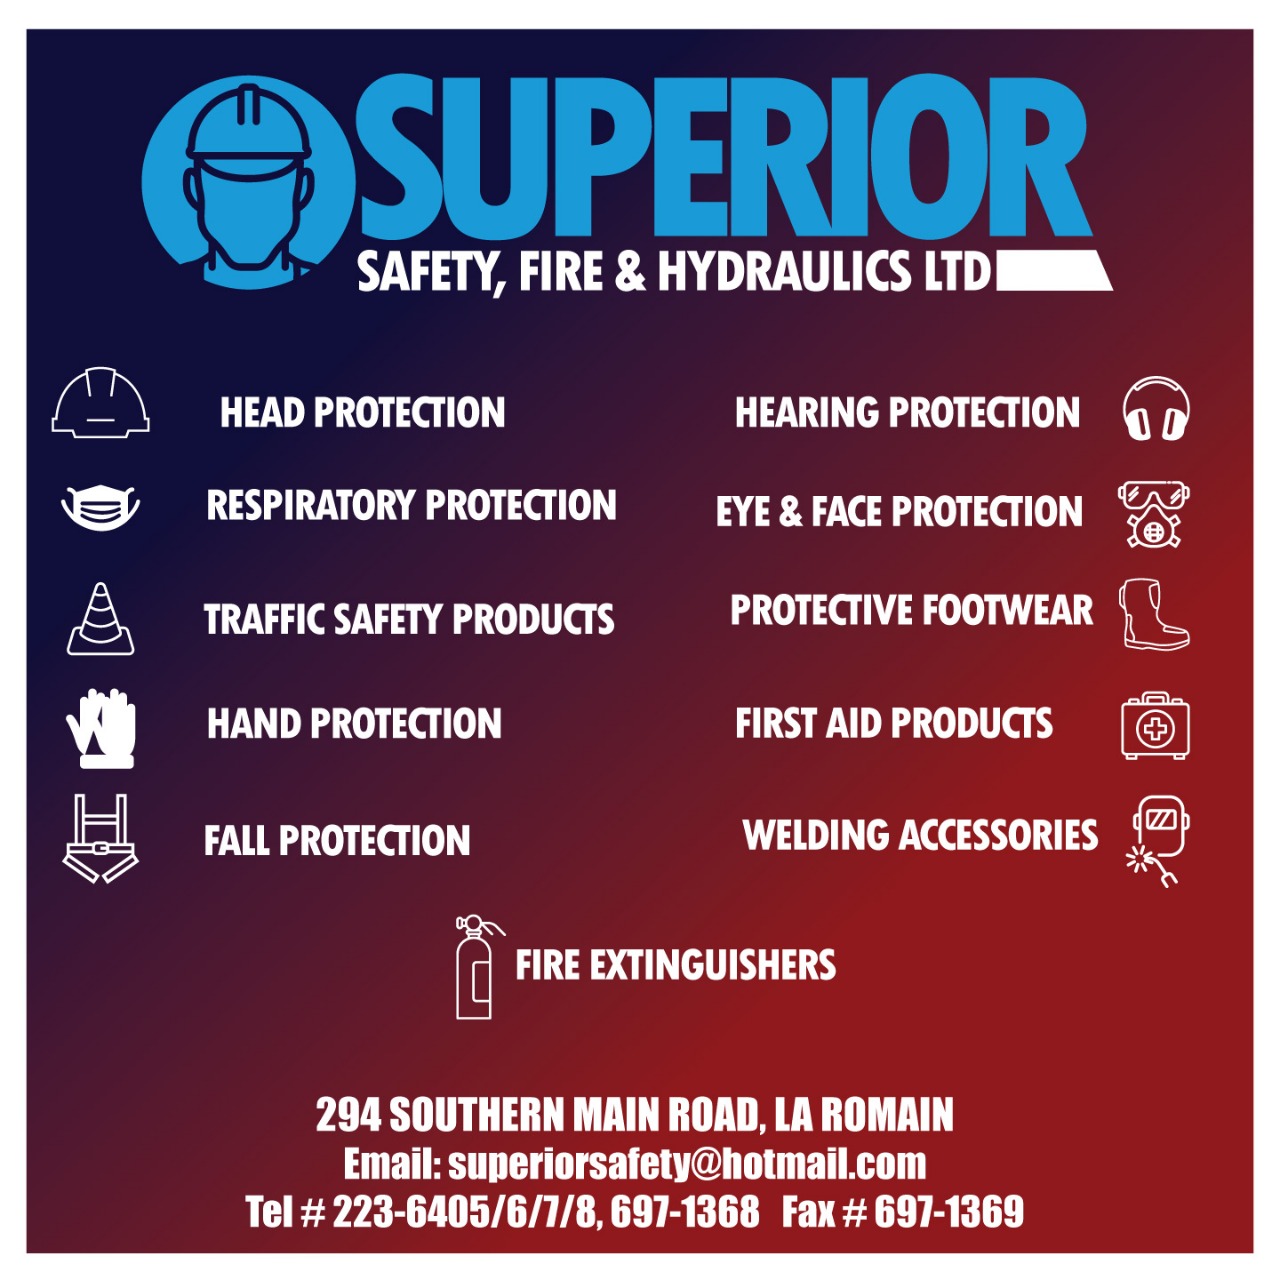 Superior Safety Fire & Hydraulics Ltd - HYDRAULIC EQUIPMENT & SUPPLIES